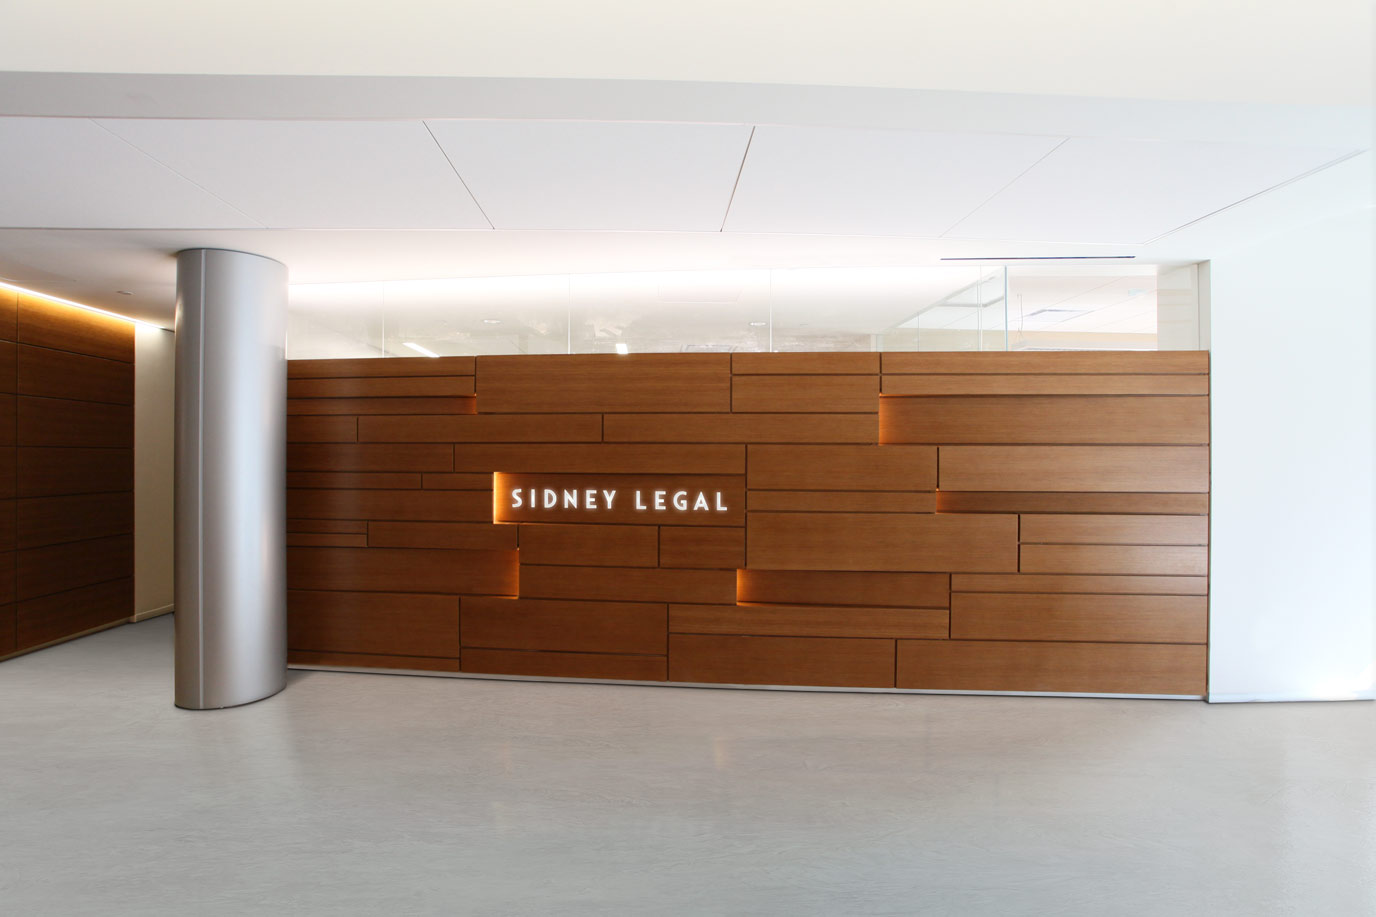 Interior Lobby Wall Identity - Environmental Graphics System